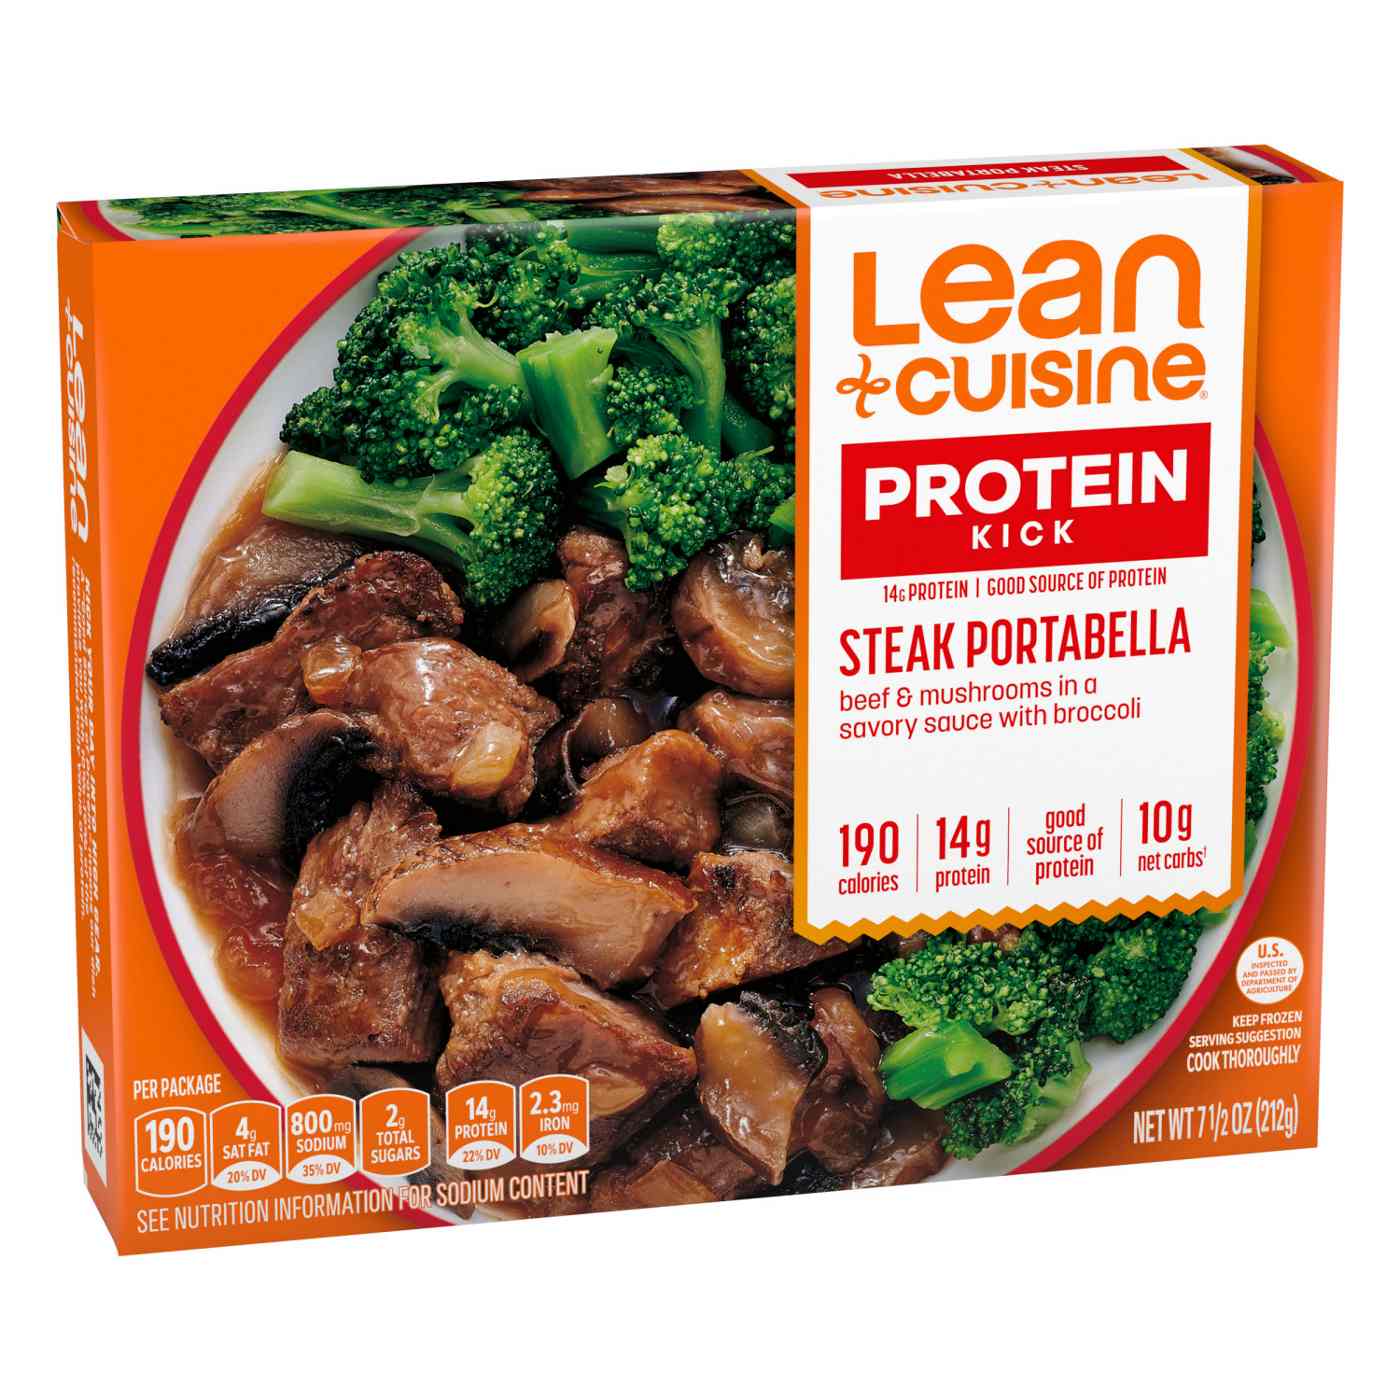 Lean Cuisine 14g Protein Steak Portabella Frozen Meal; image 6 of 7